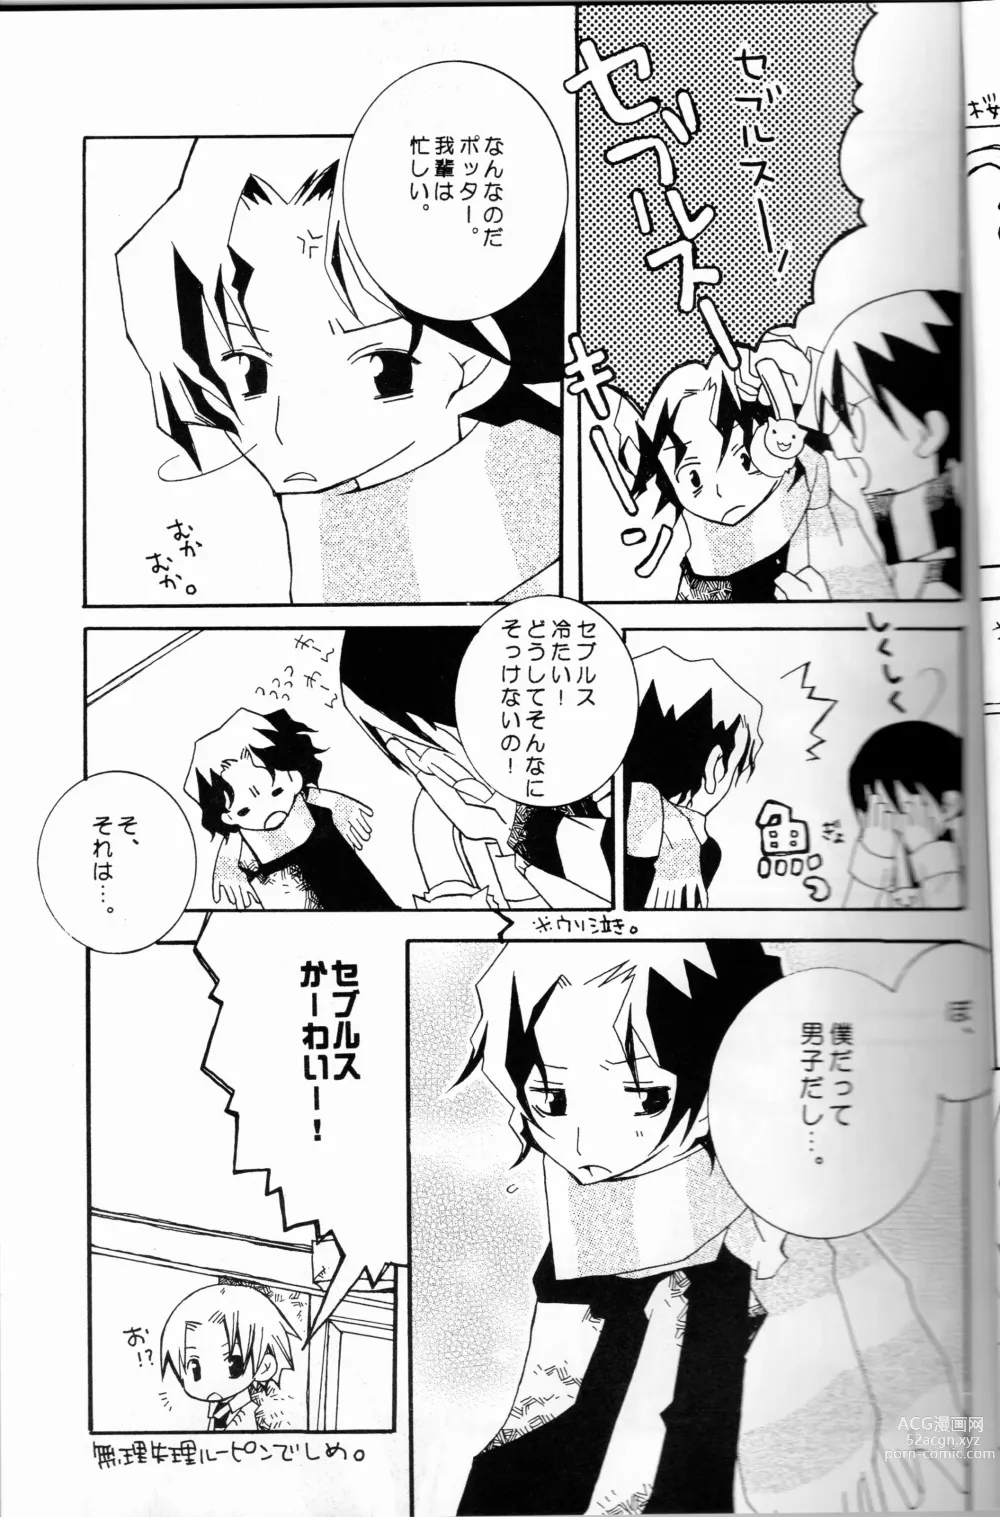 Page 12 of doujinshi 44